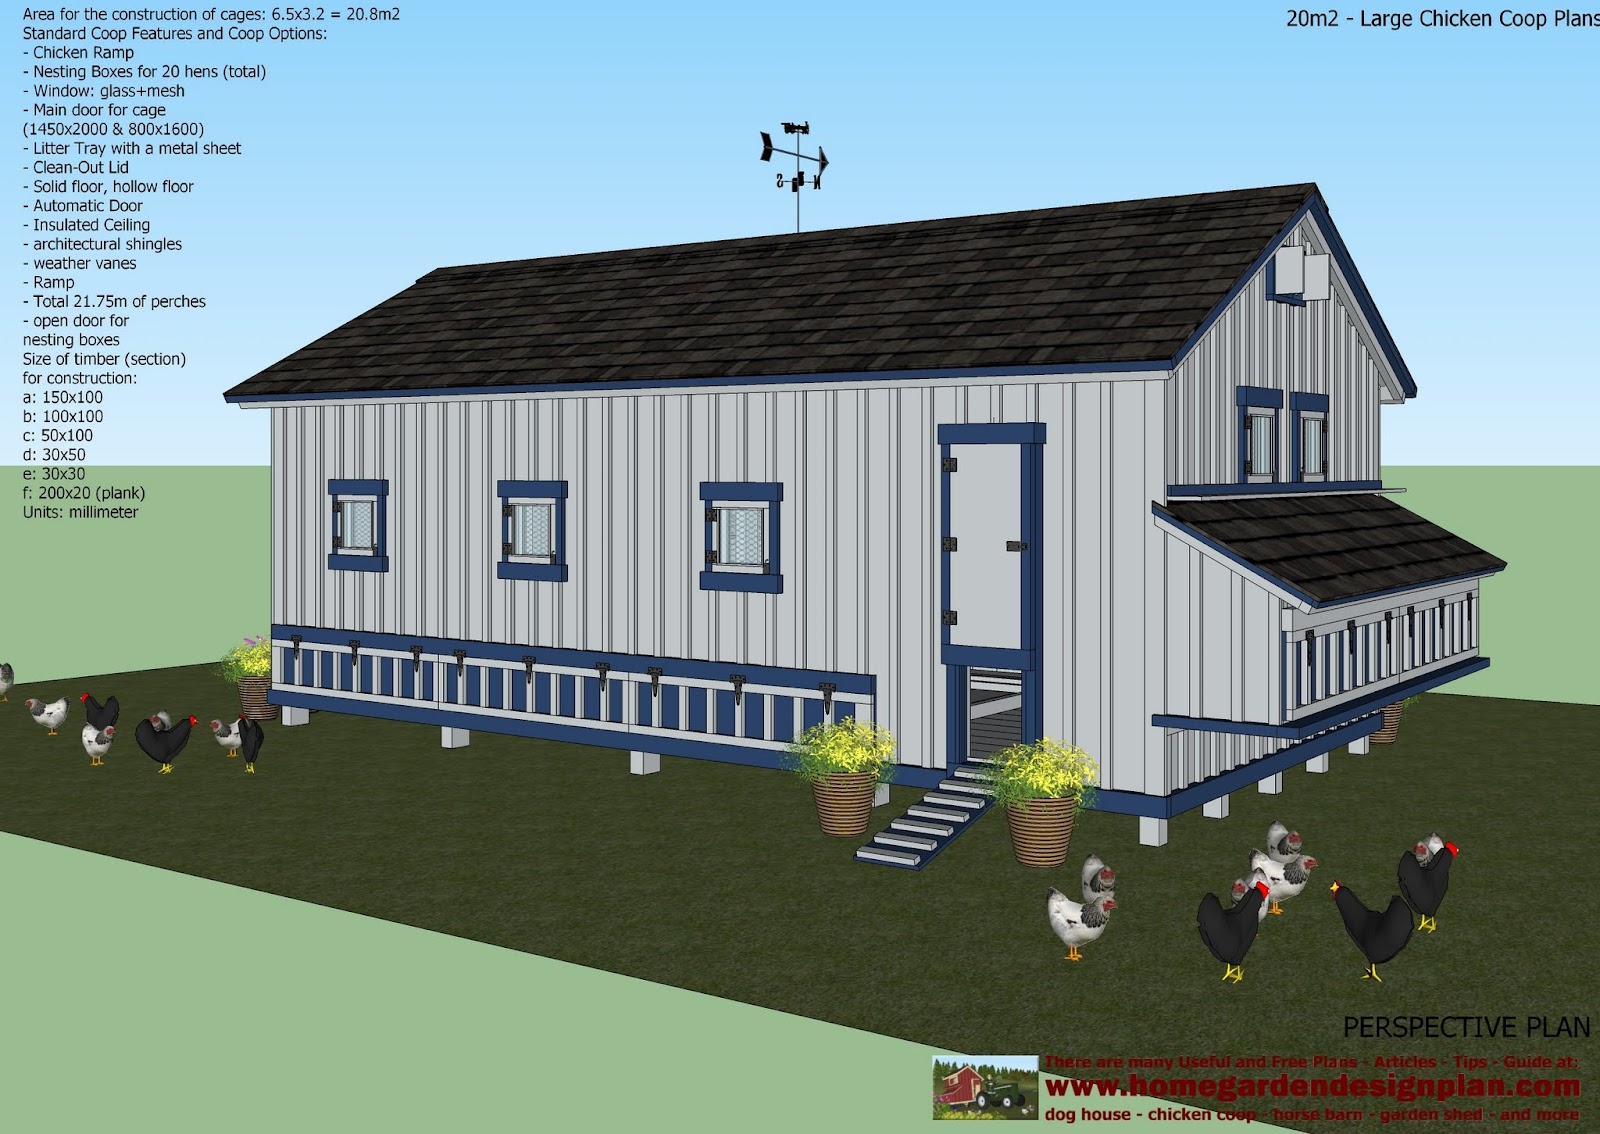 ... chicken coop plans - Chicken coop design - How to build a chicken coop